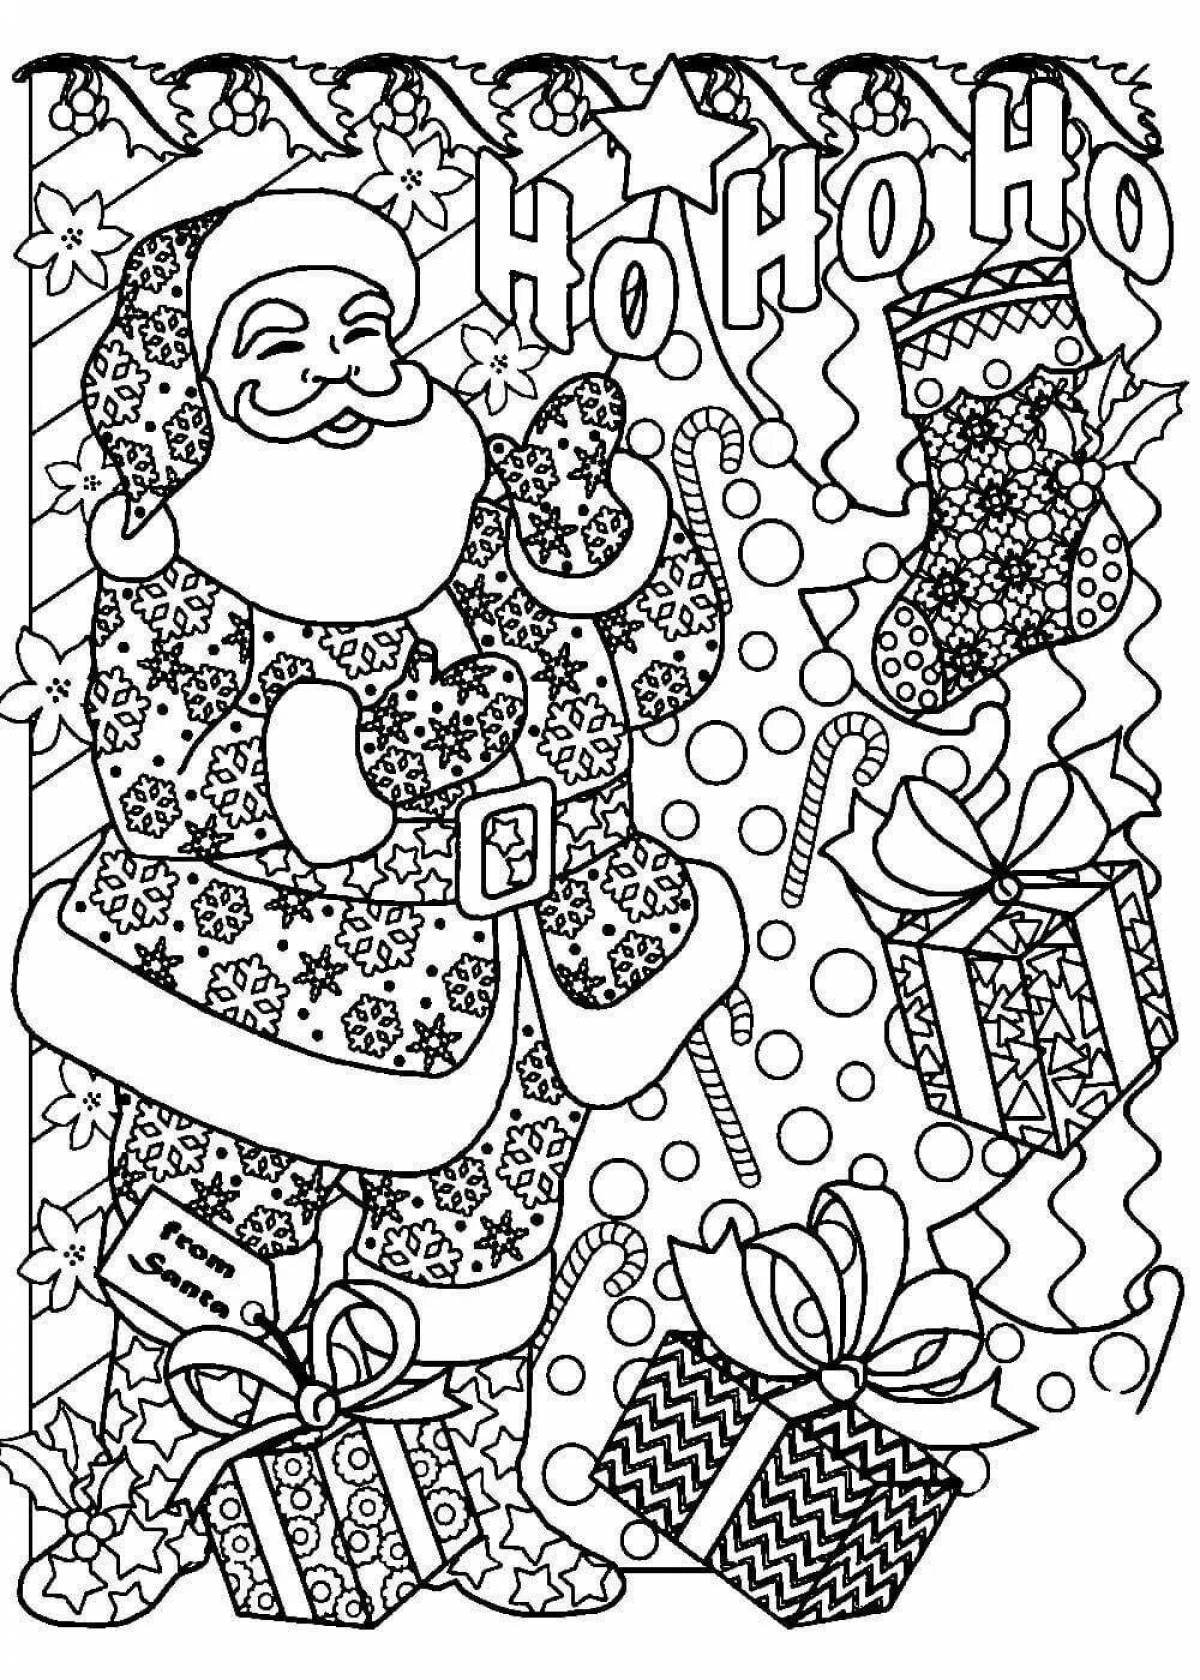 Coloring book sparkling santa claus